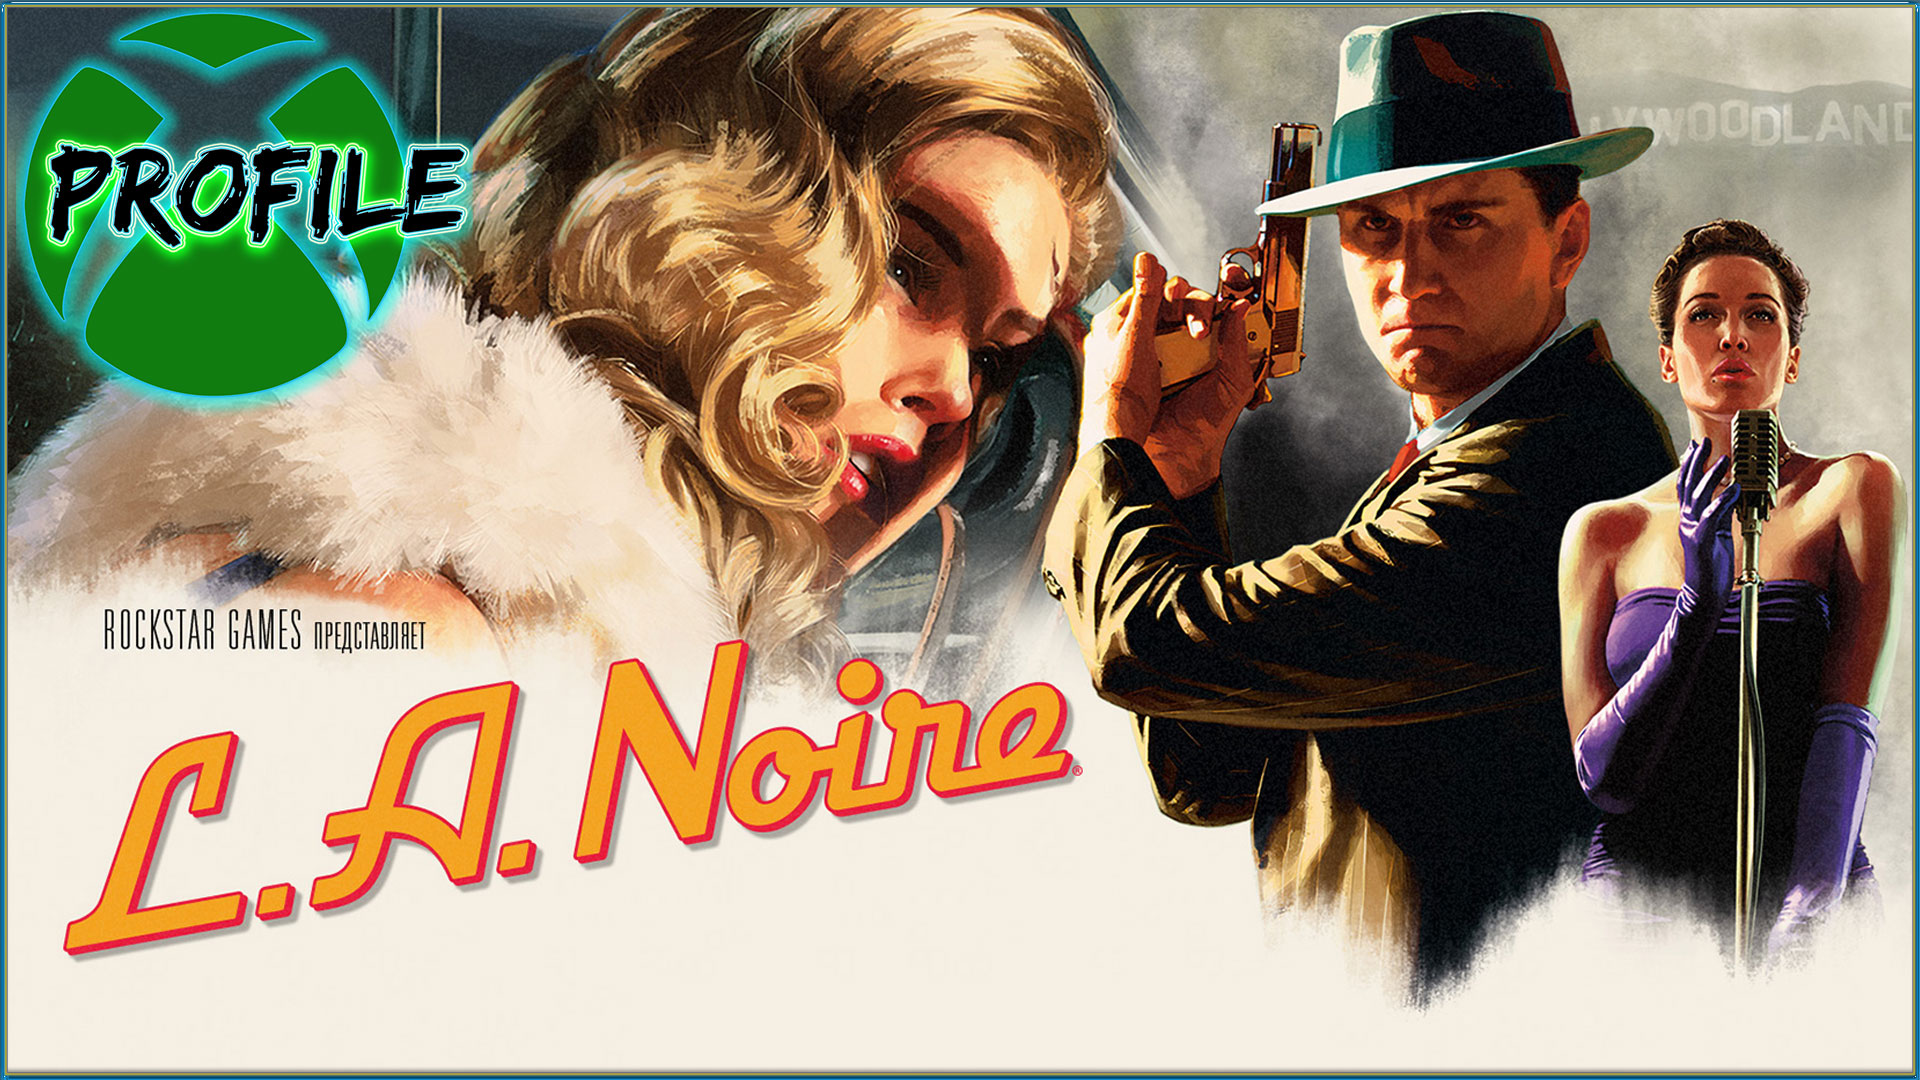 L.A. Noire XBOX ONE/Xbox Series X|S